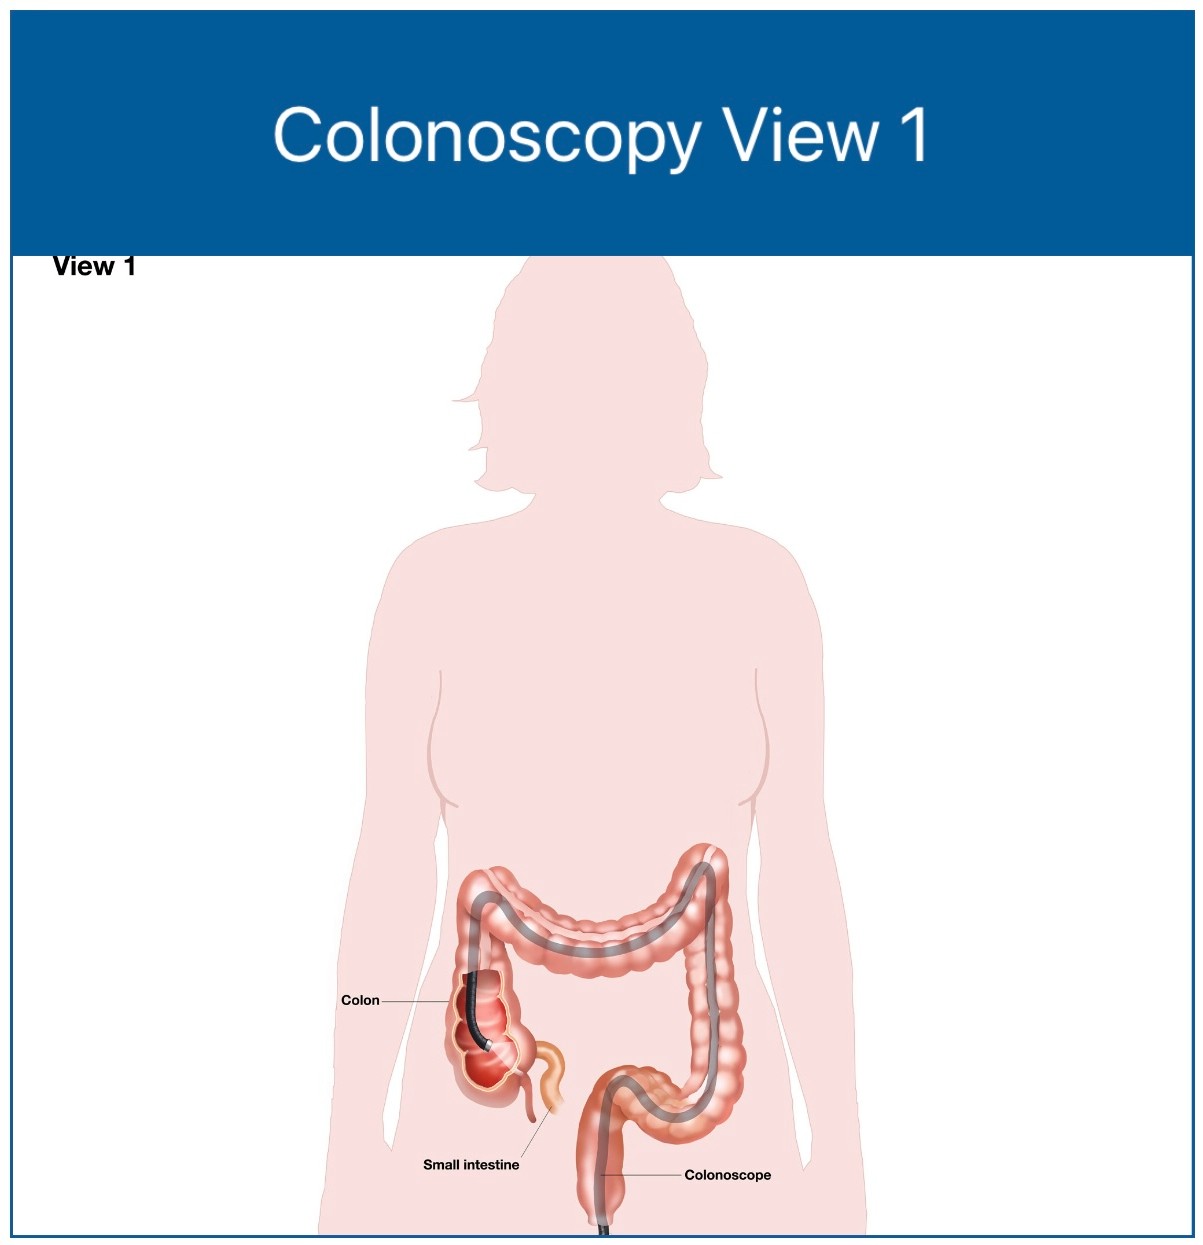 Colonoscopy View 1